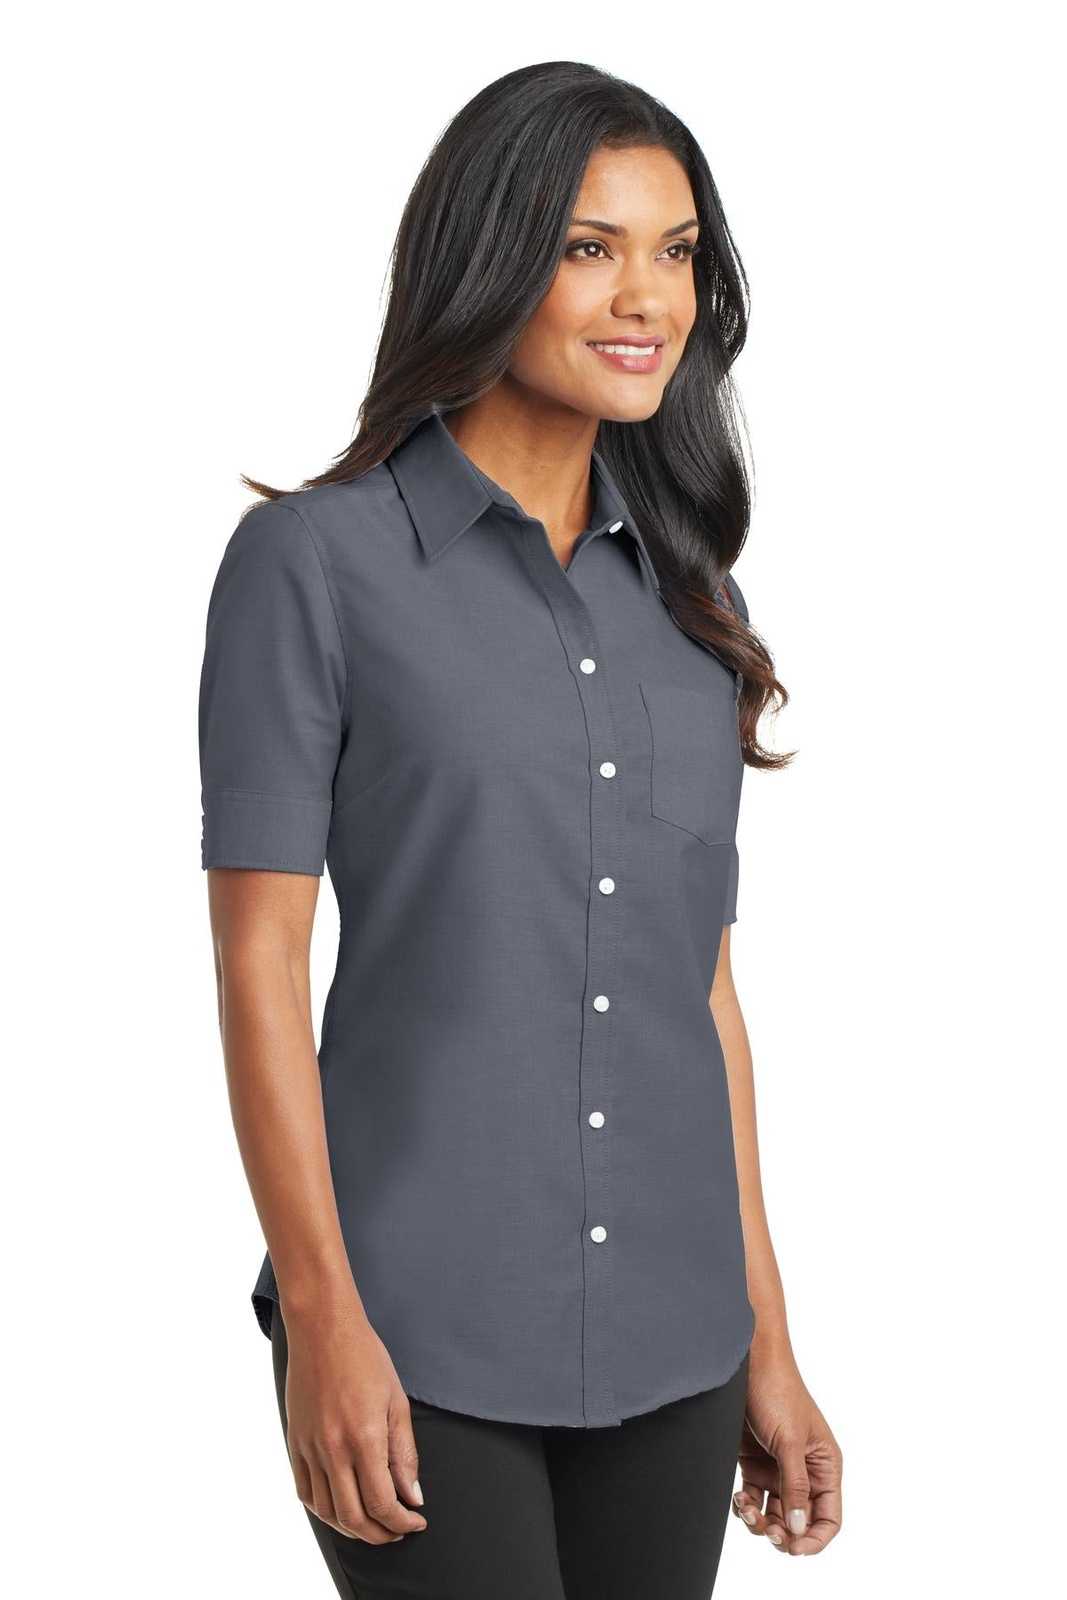 Port Authority L659 Ladies Short Sleeve Superpro Oxford Shirt - Black - HIT a Double - 4